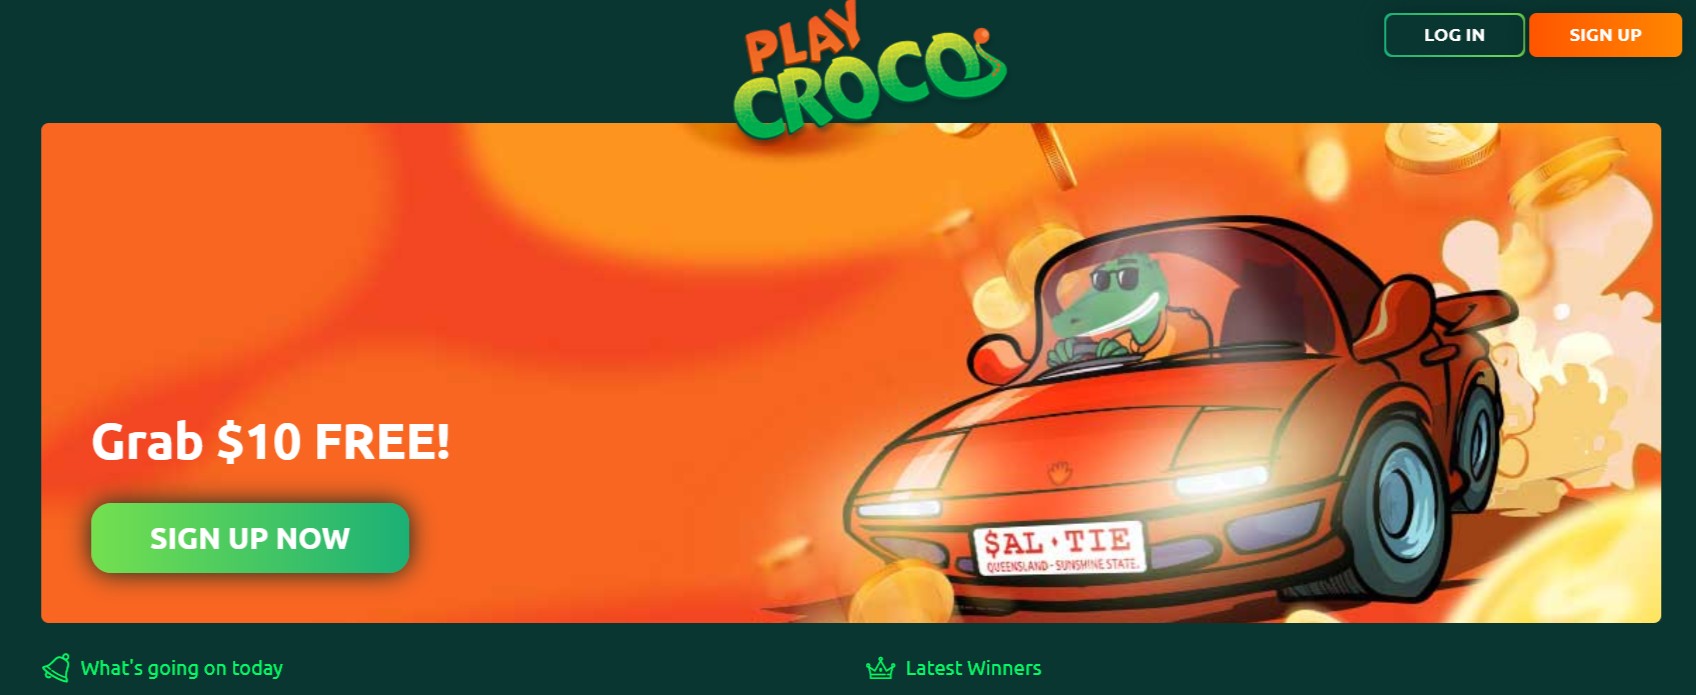 playcroco casino website homepage screenshot